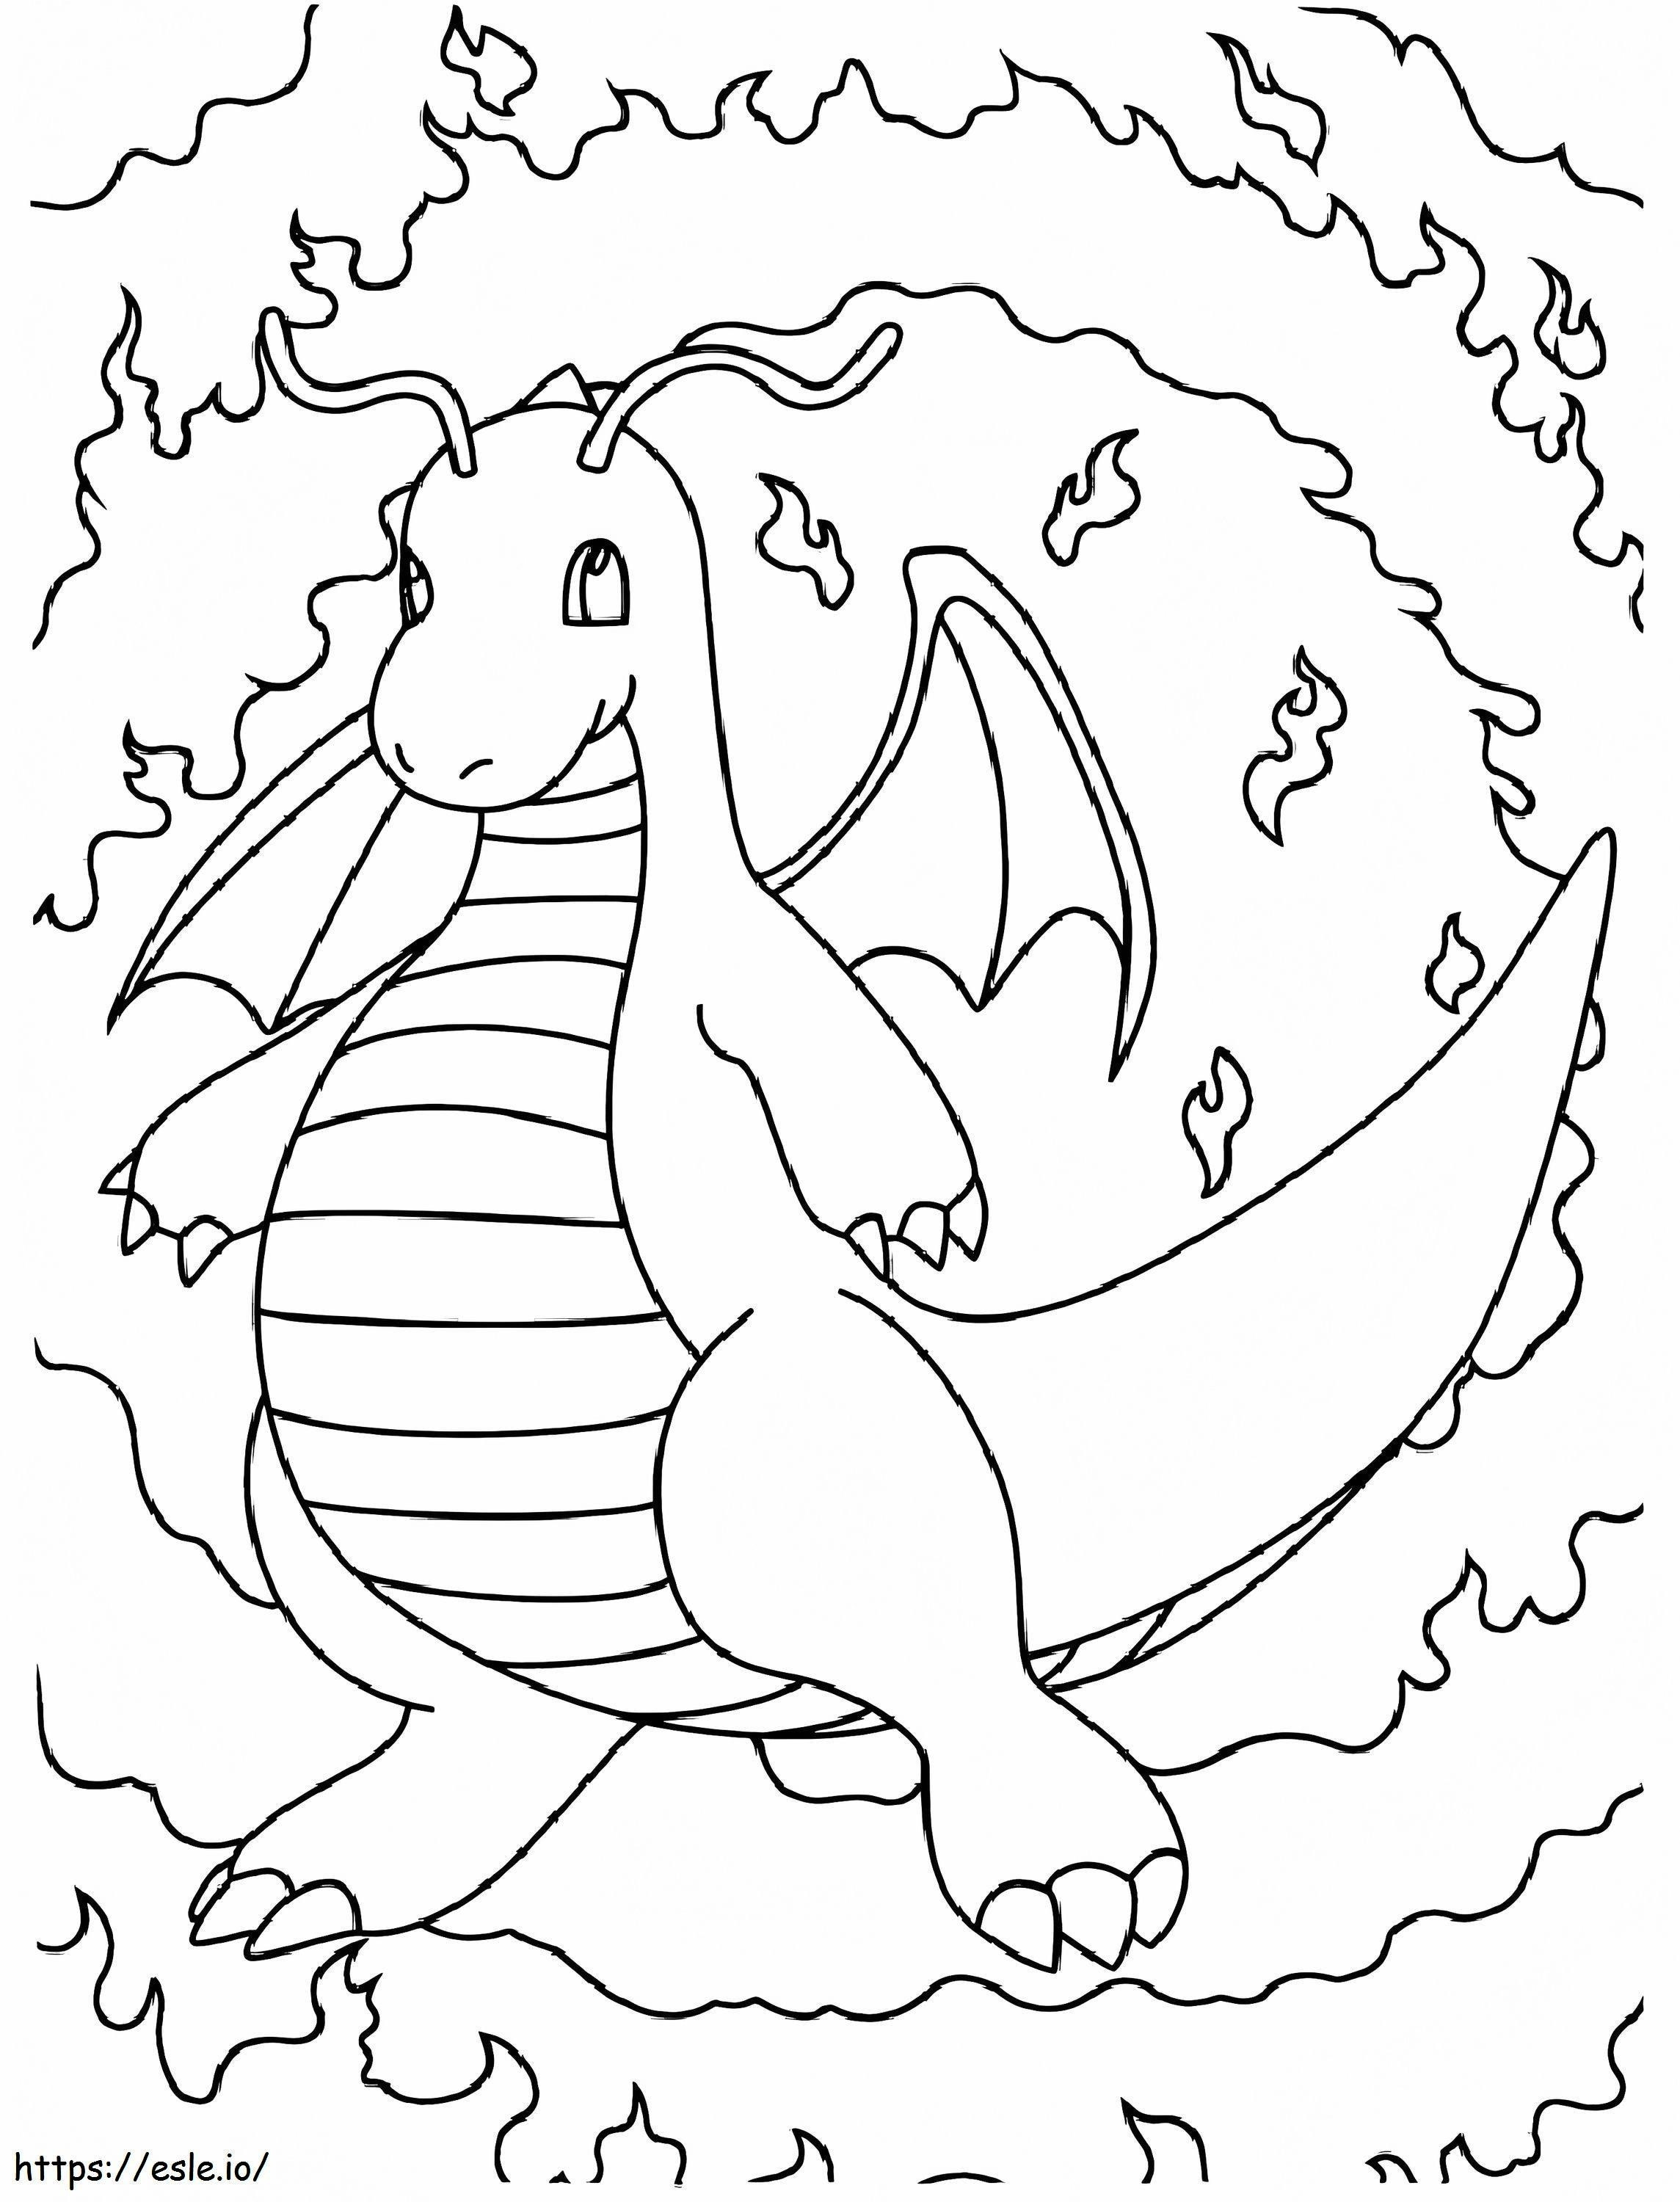 Dragonite 5 coloring page